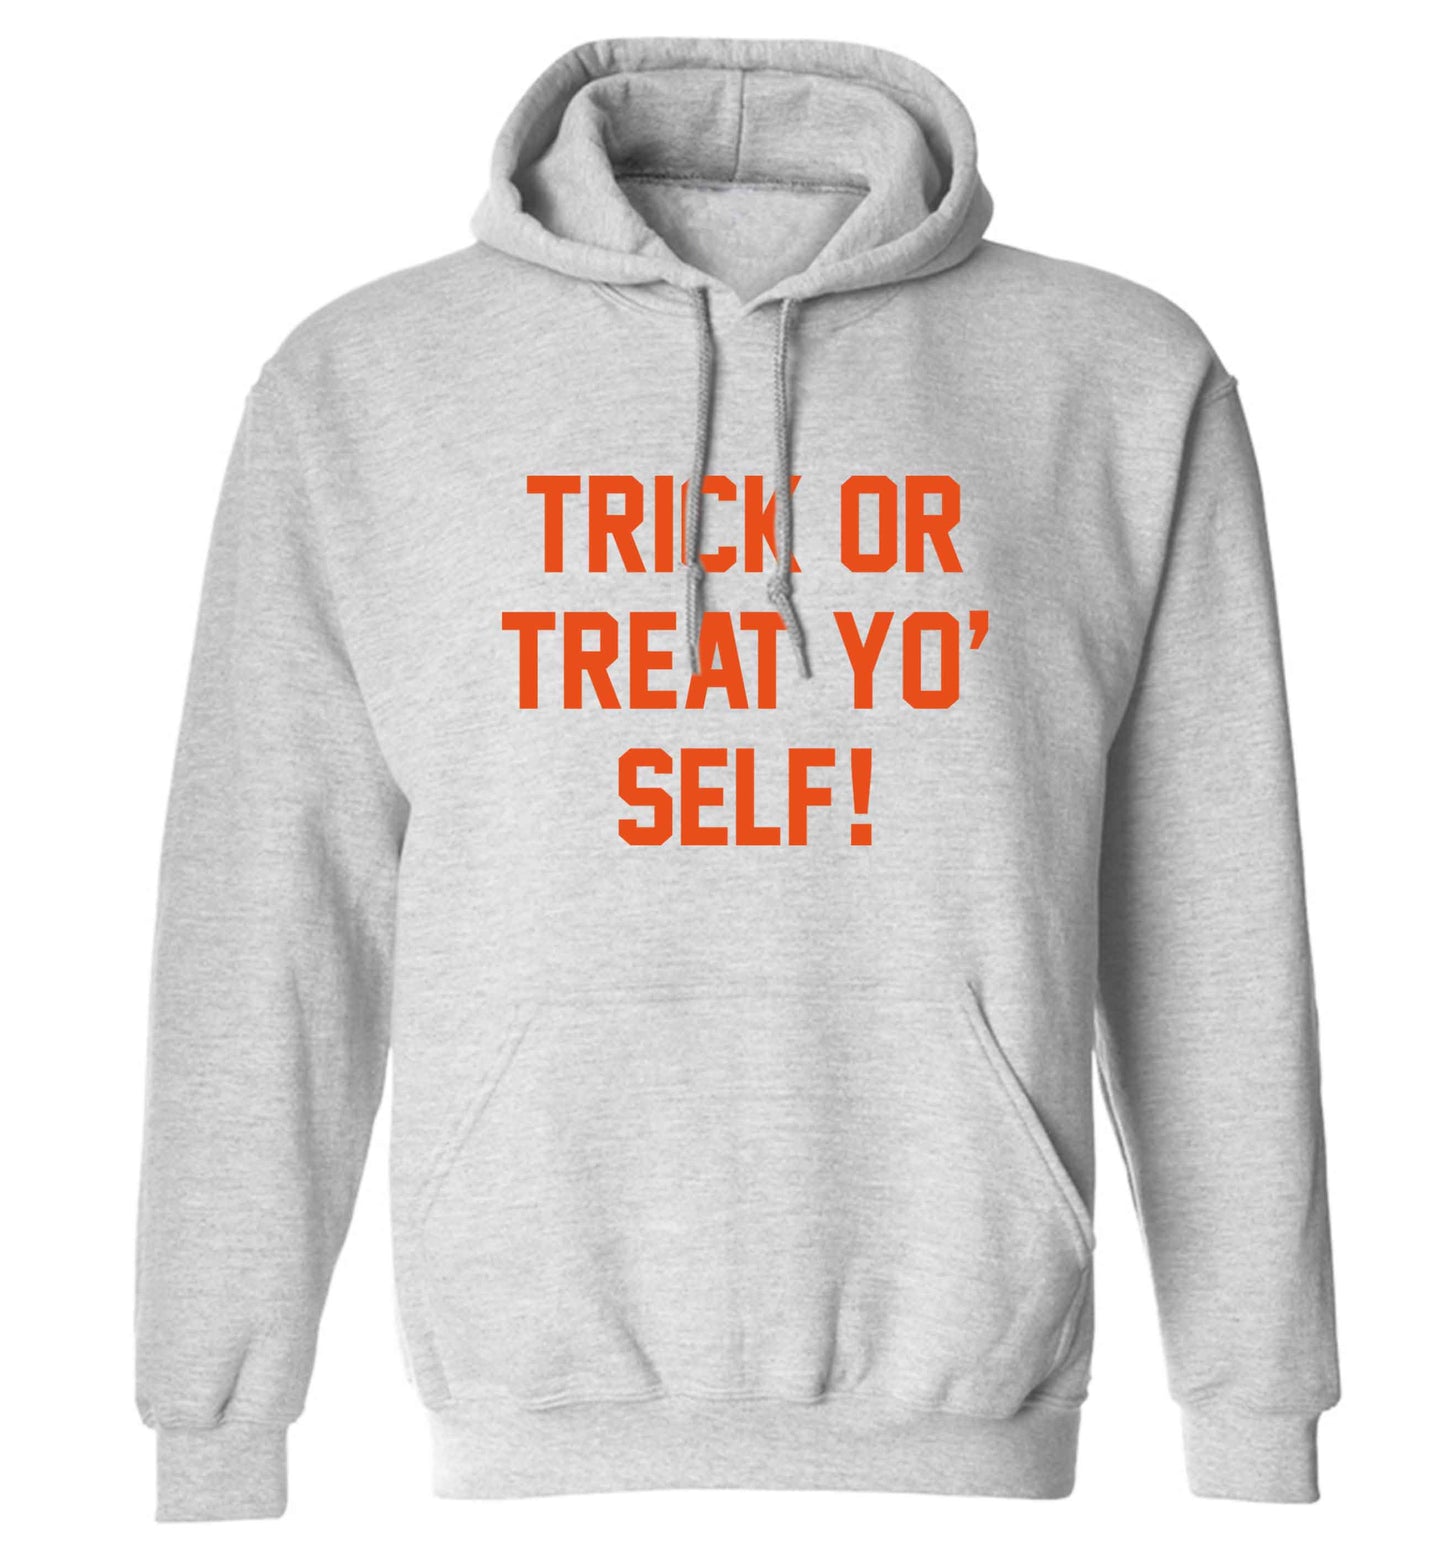 Trick or Treat Yo' Self adults unisex grey hoodie 2XL